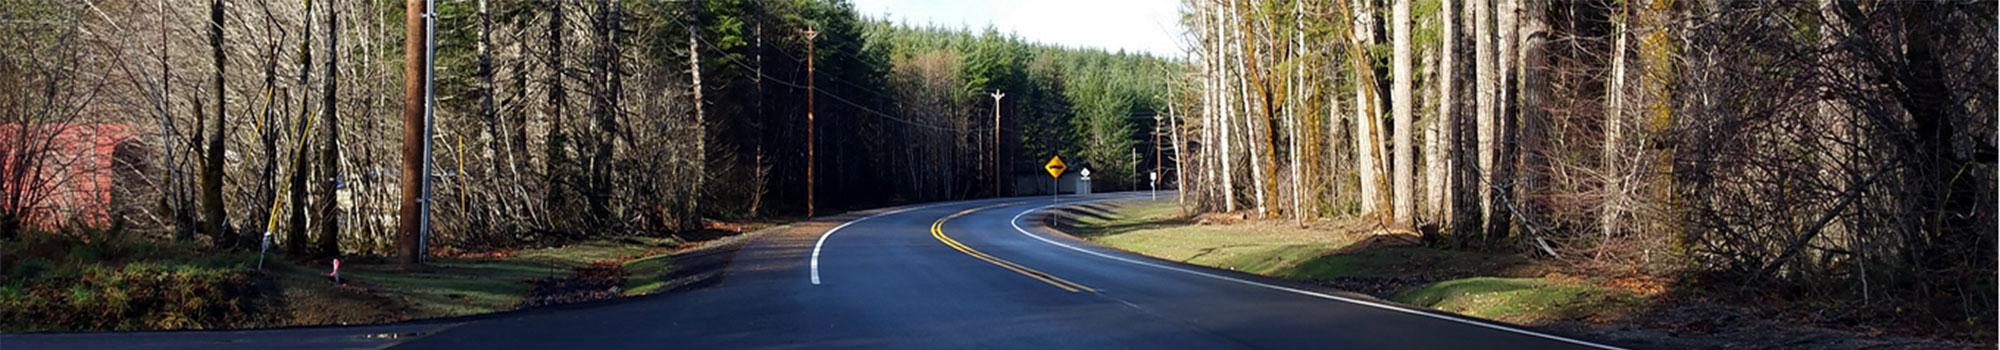 Highway image